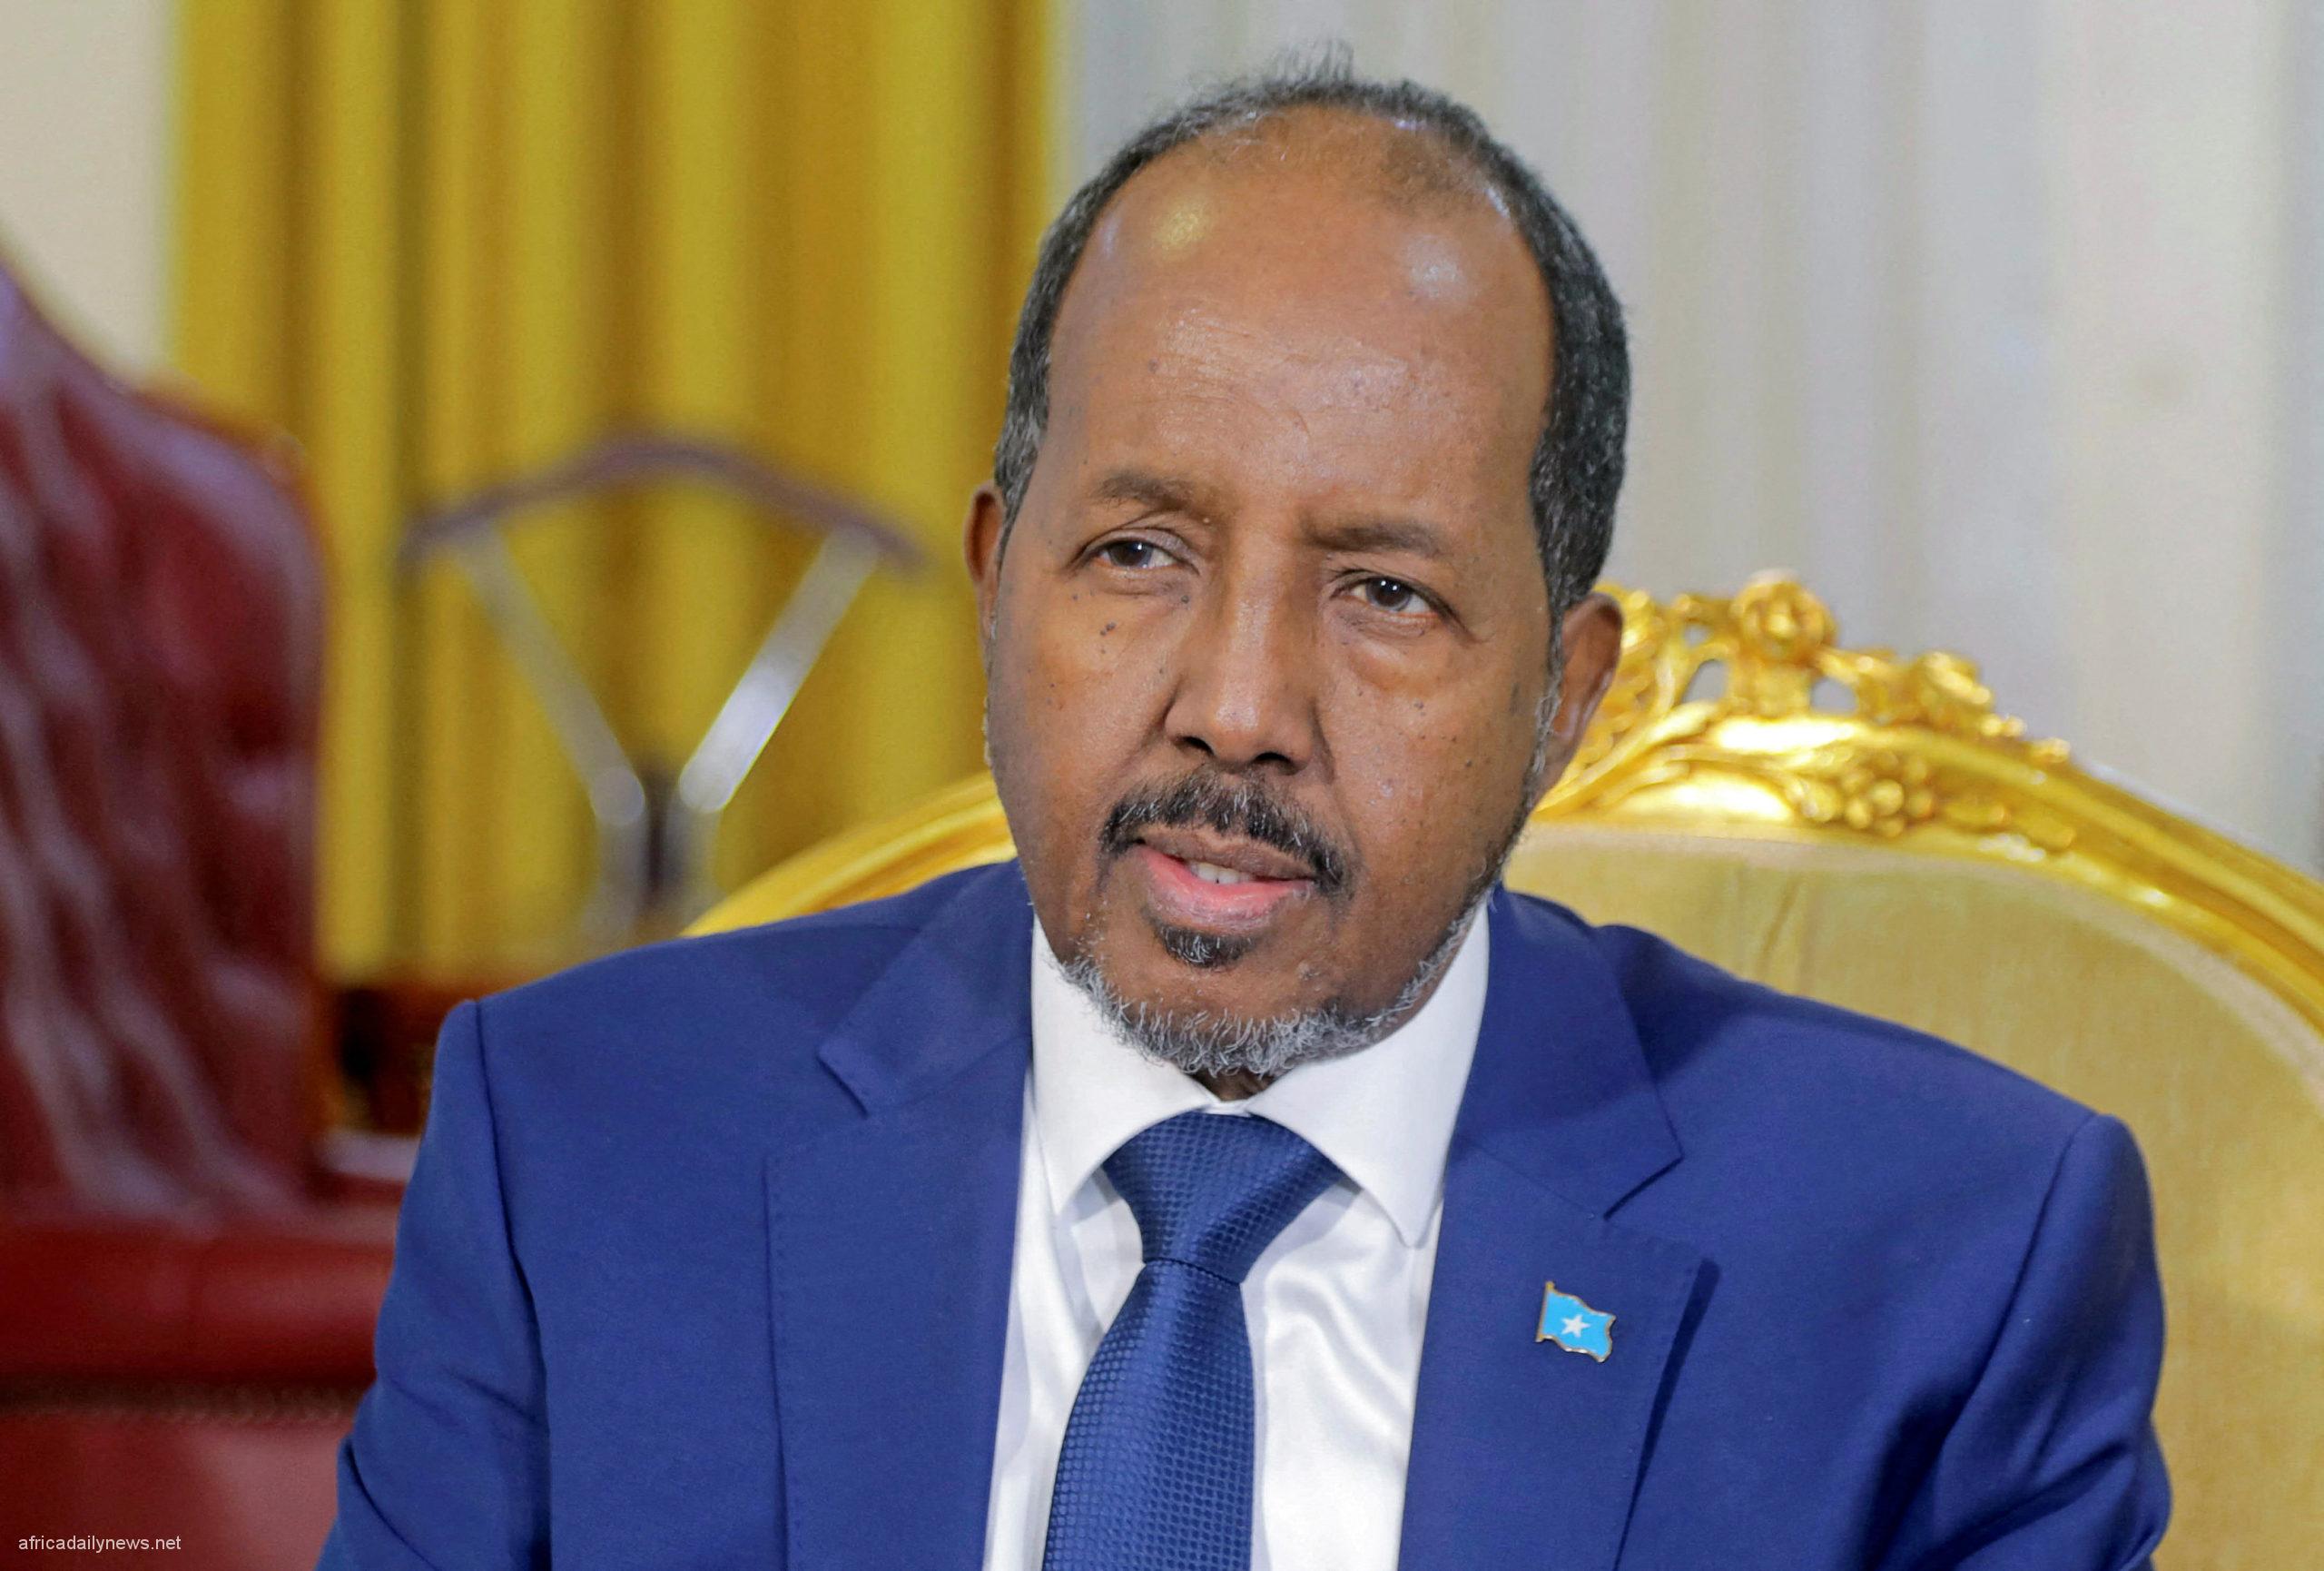 Somali New President Tests Positive For COVID-19